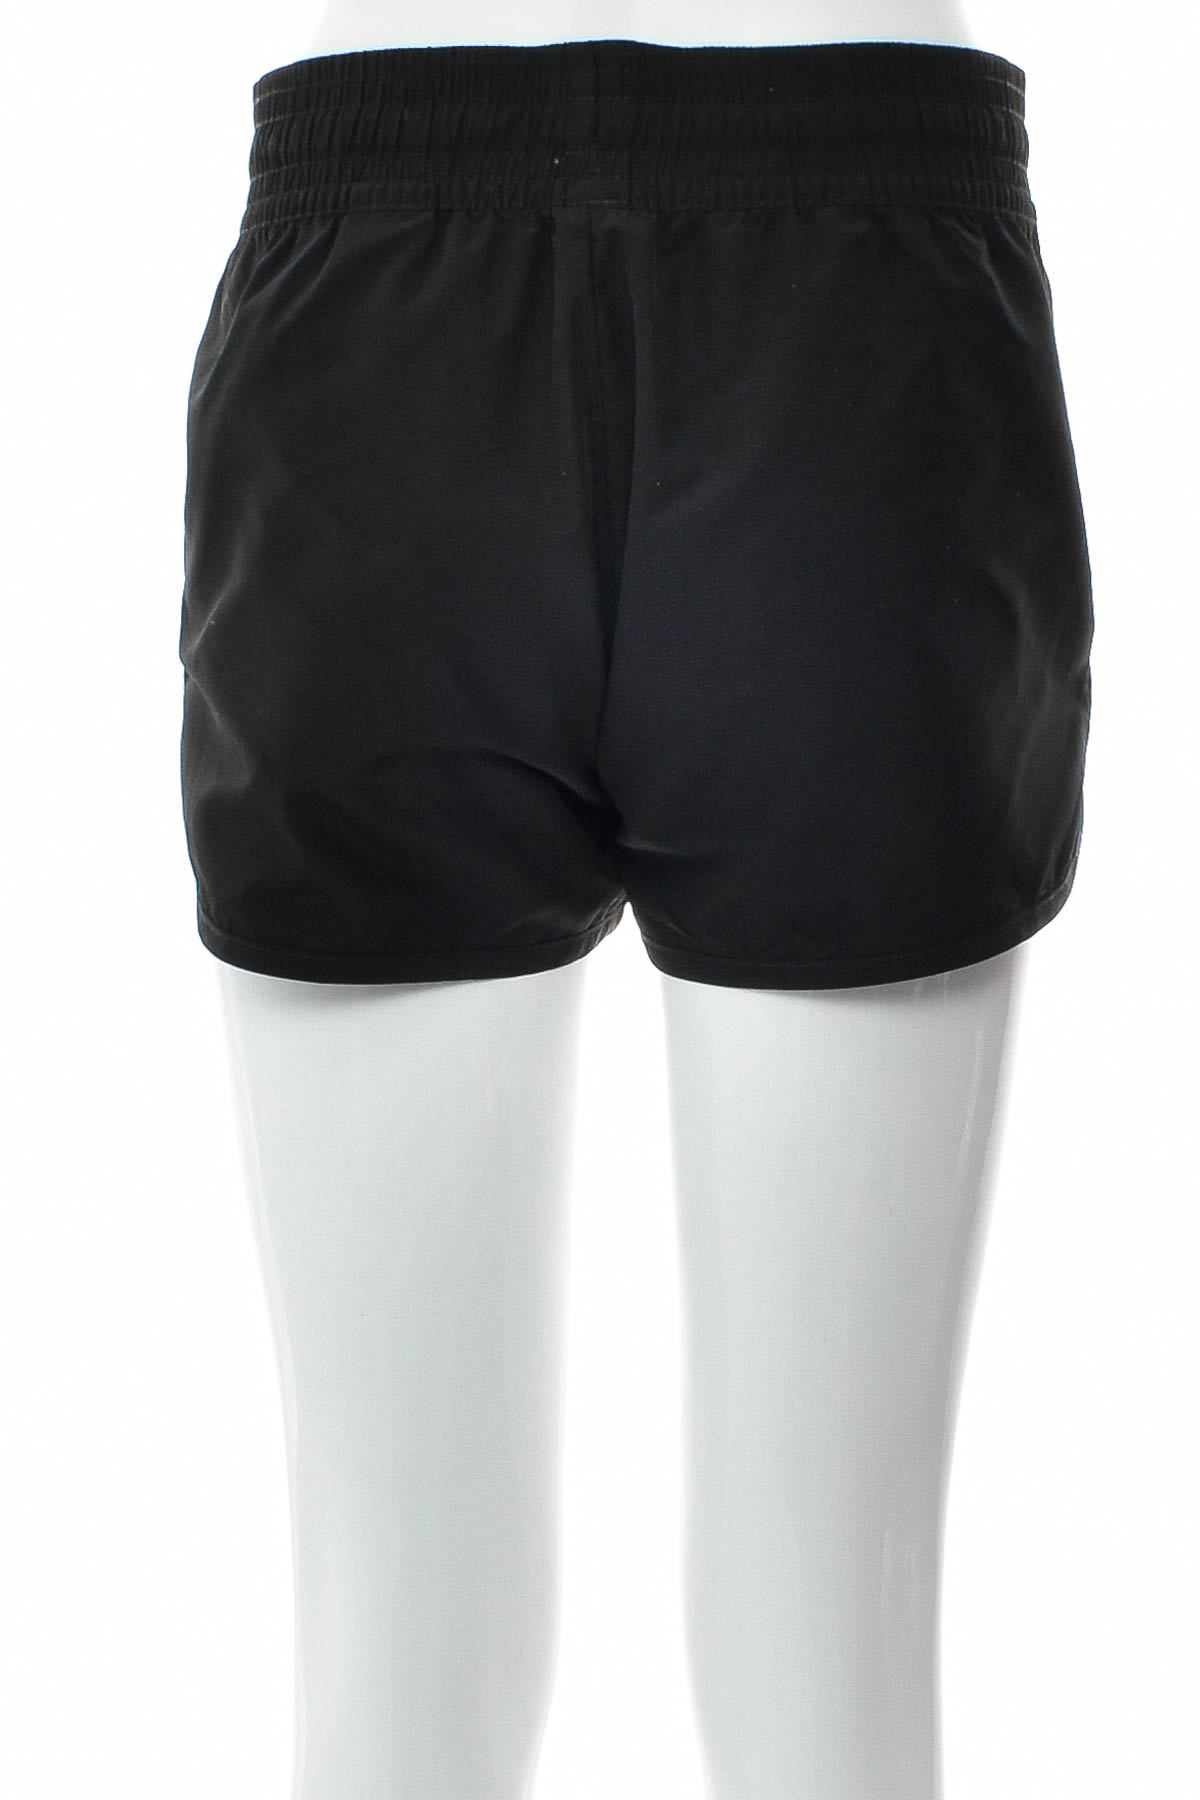 Women's shorts - H&M Sport - 1